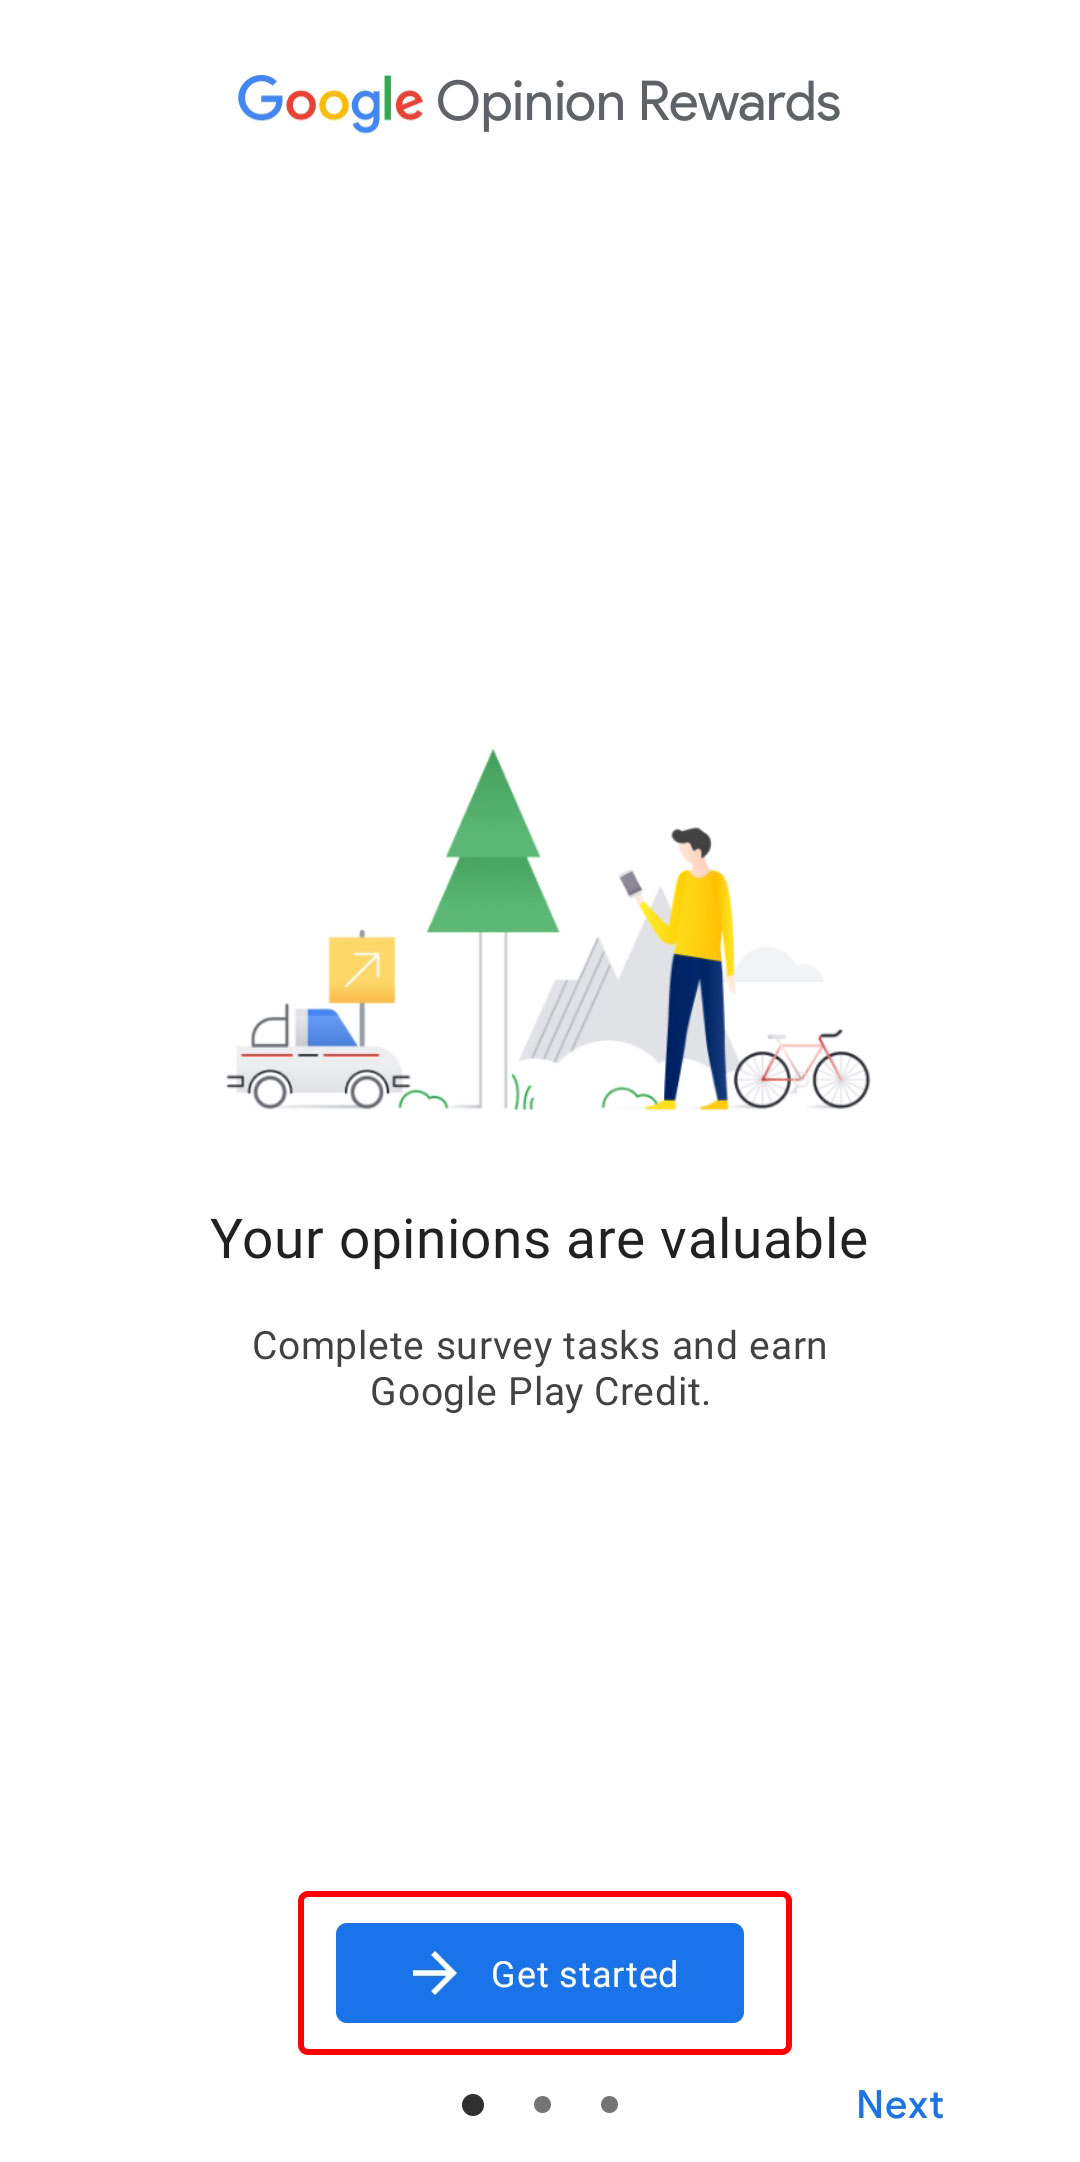 Launch of Google Opinion Rewards